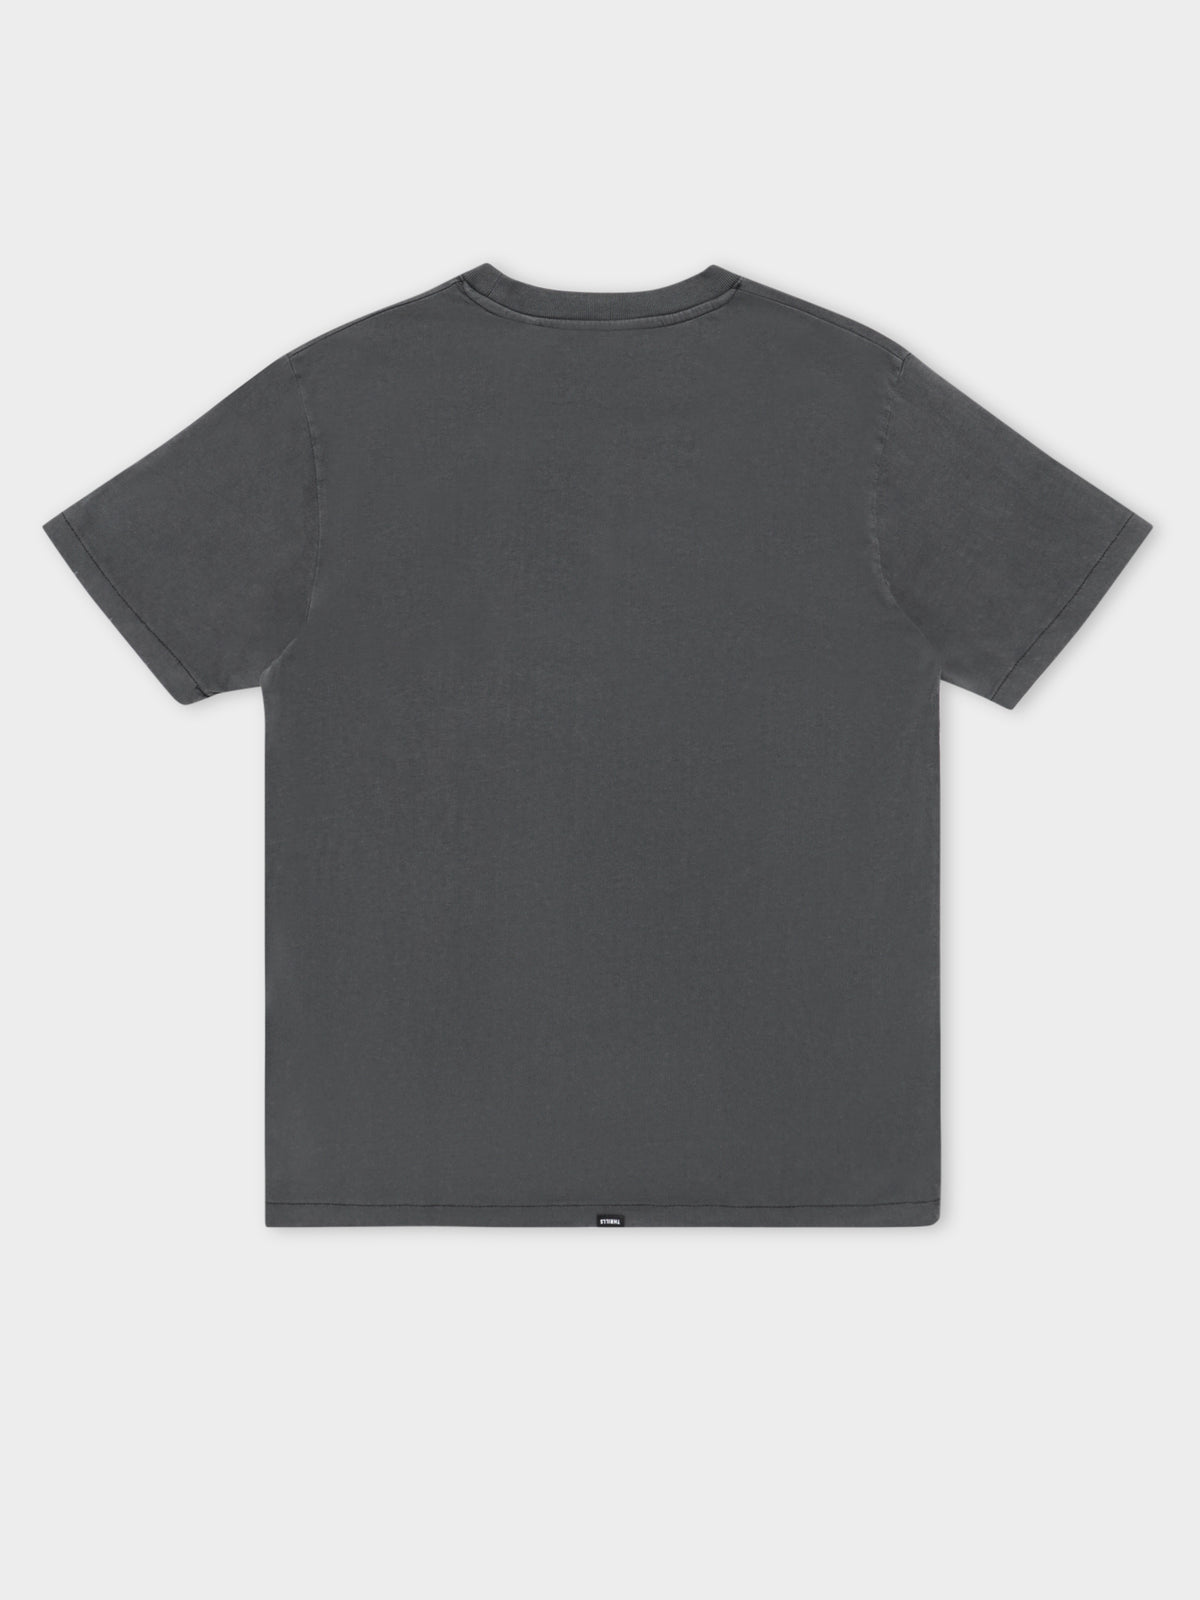 Havoc Merch Fit T-Shirt in Merch Black